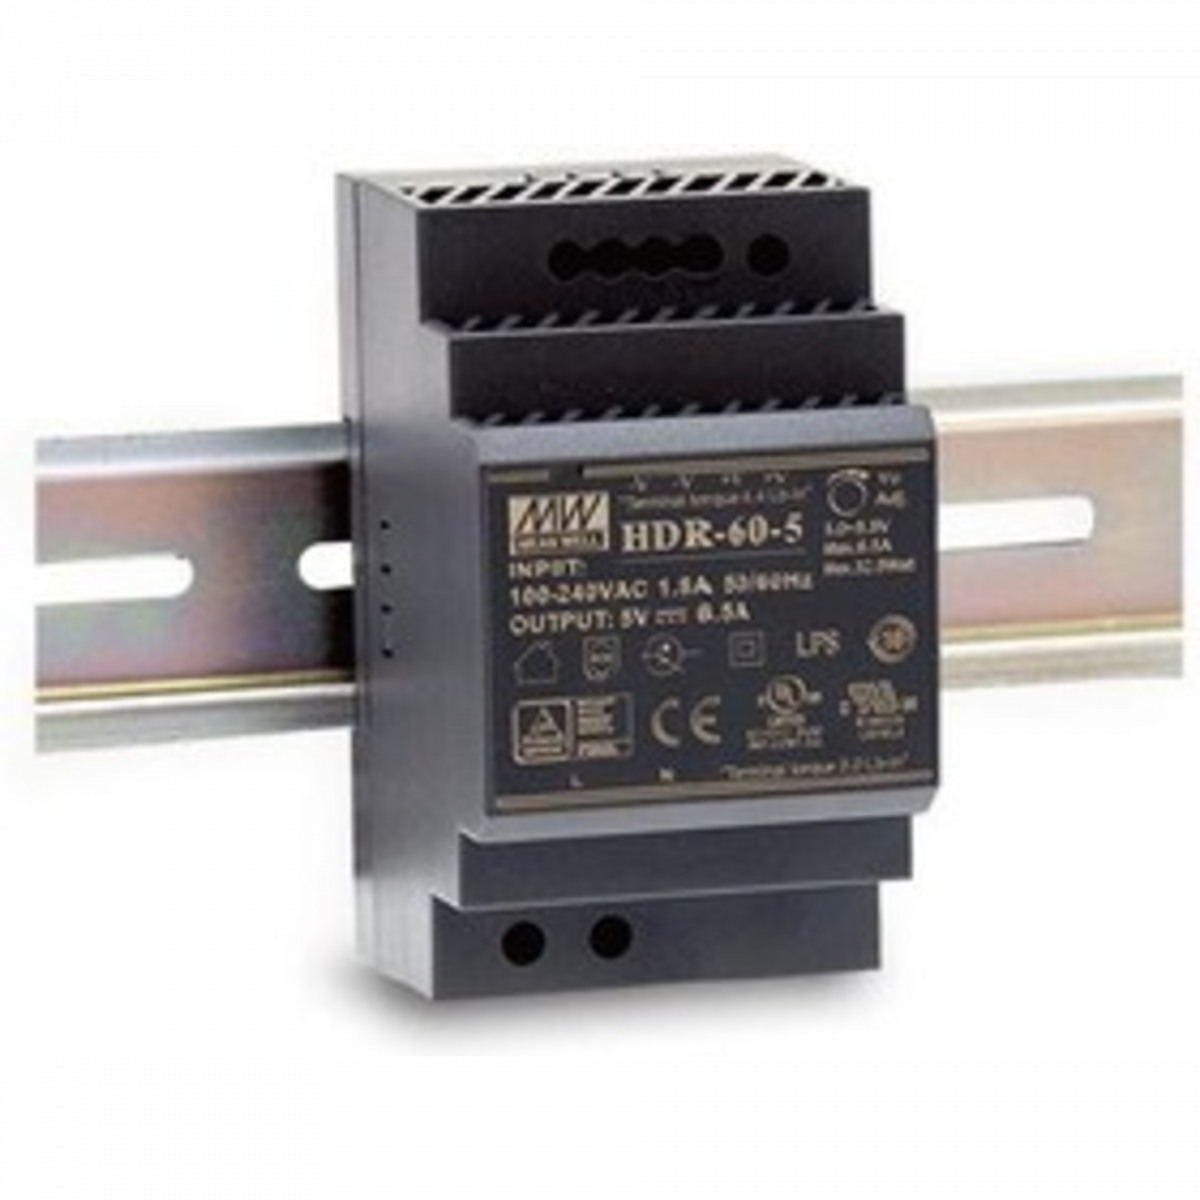 HDR-60-15 Блок питания на DIN-рейку, 15В, 4А, 60Вт Mean Well